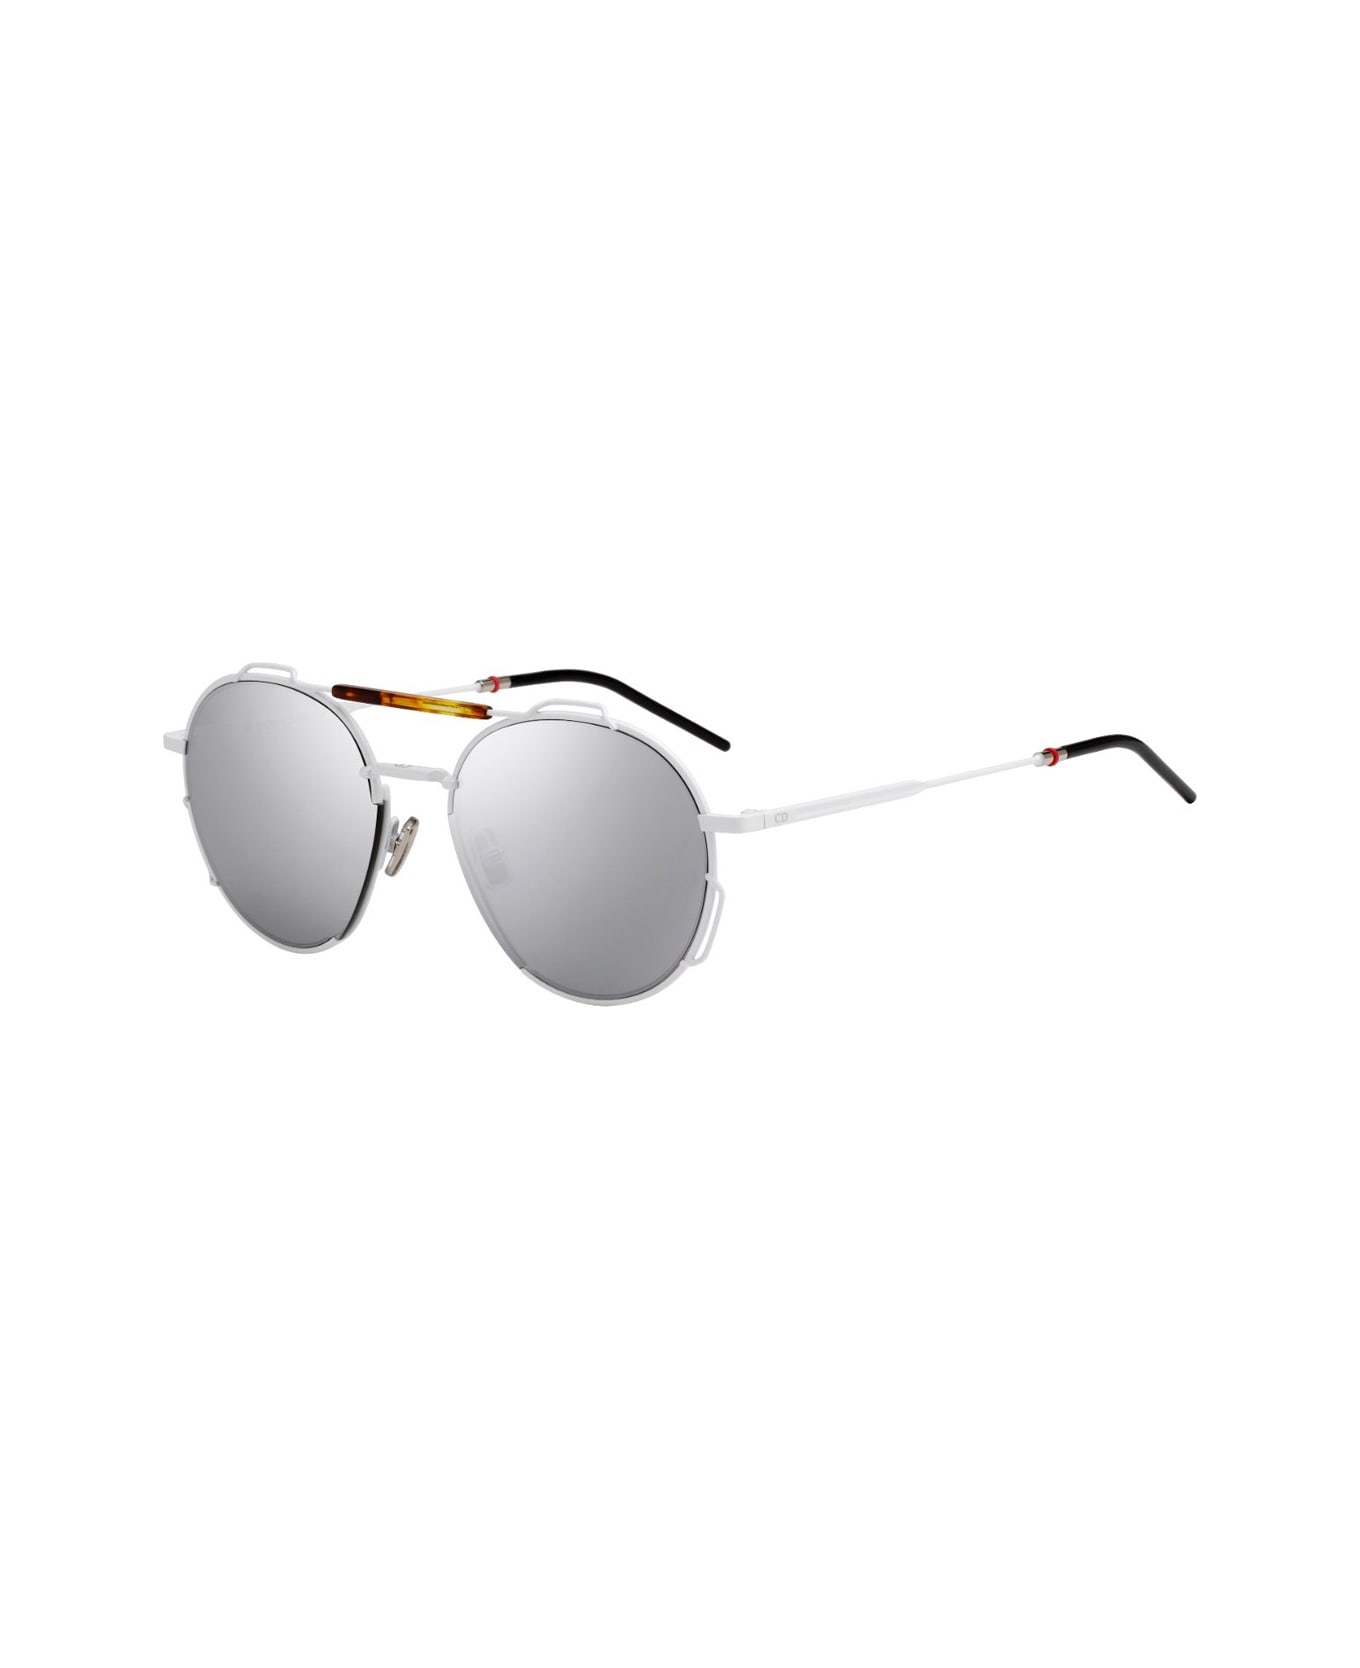 Dior Eyewear 0234 S Sunglasses - Argento サングラス